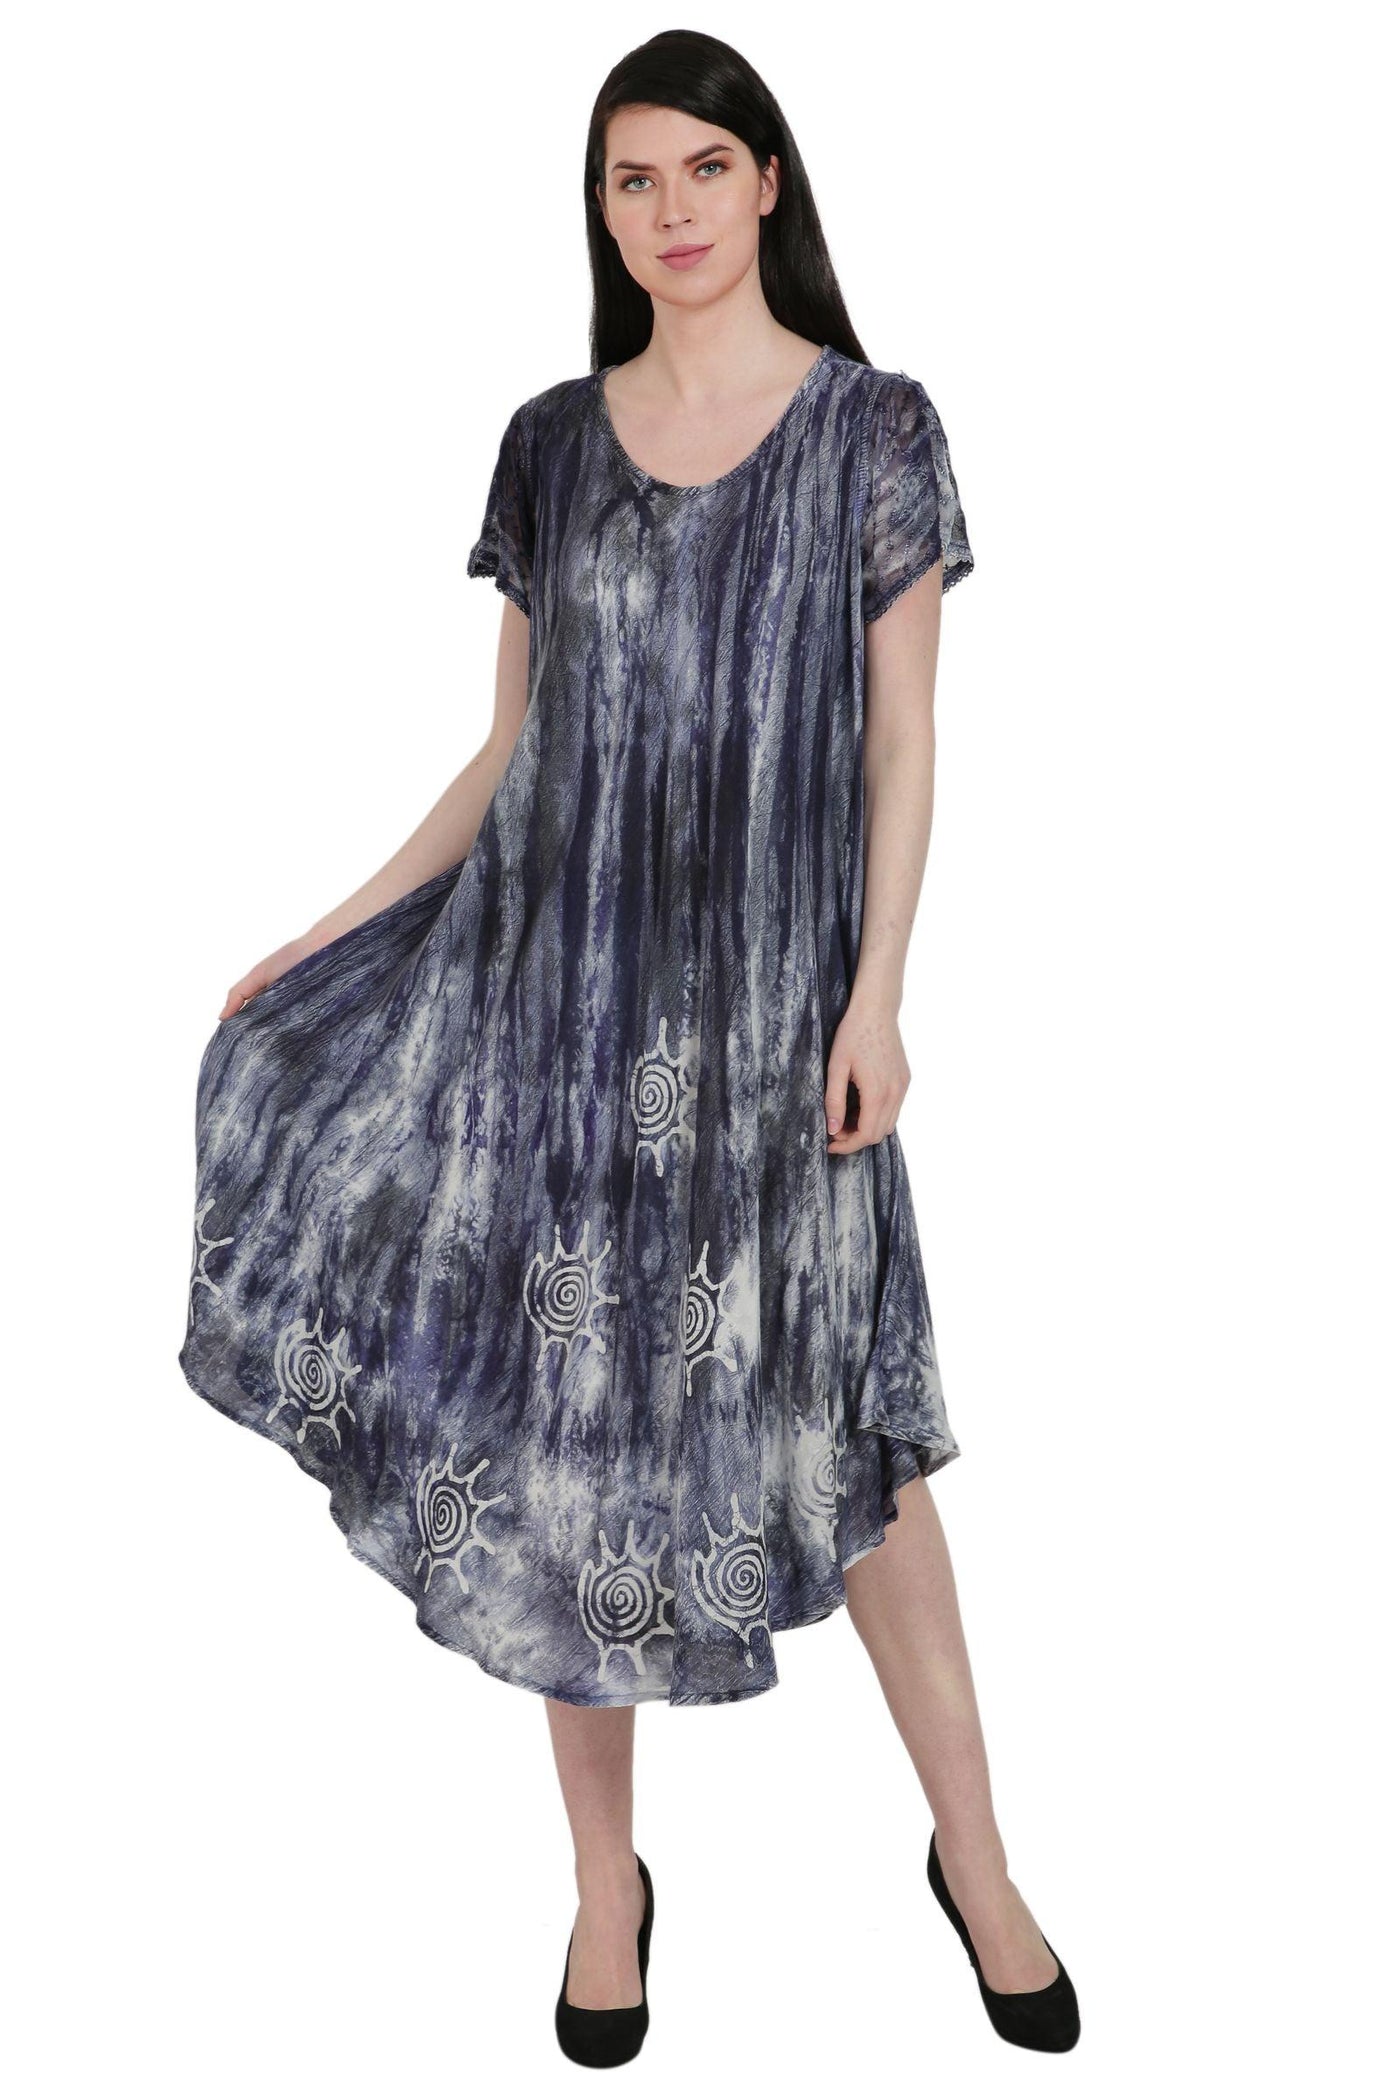 Batik + Tie Dye Trapeze Dress UDS52-2438  - Advance Apparels Inc